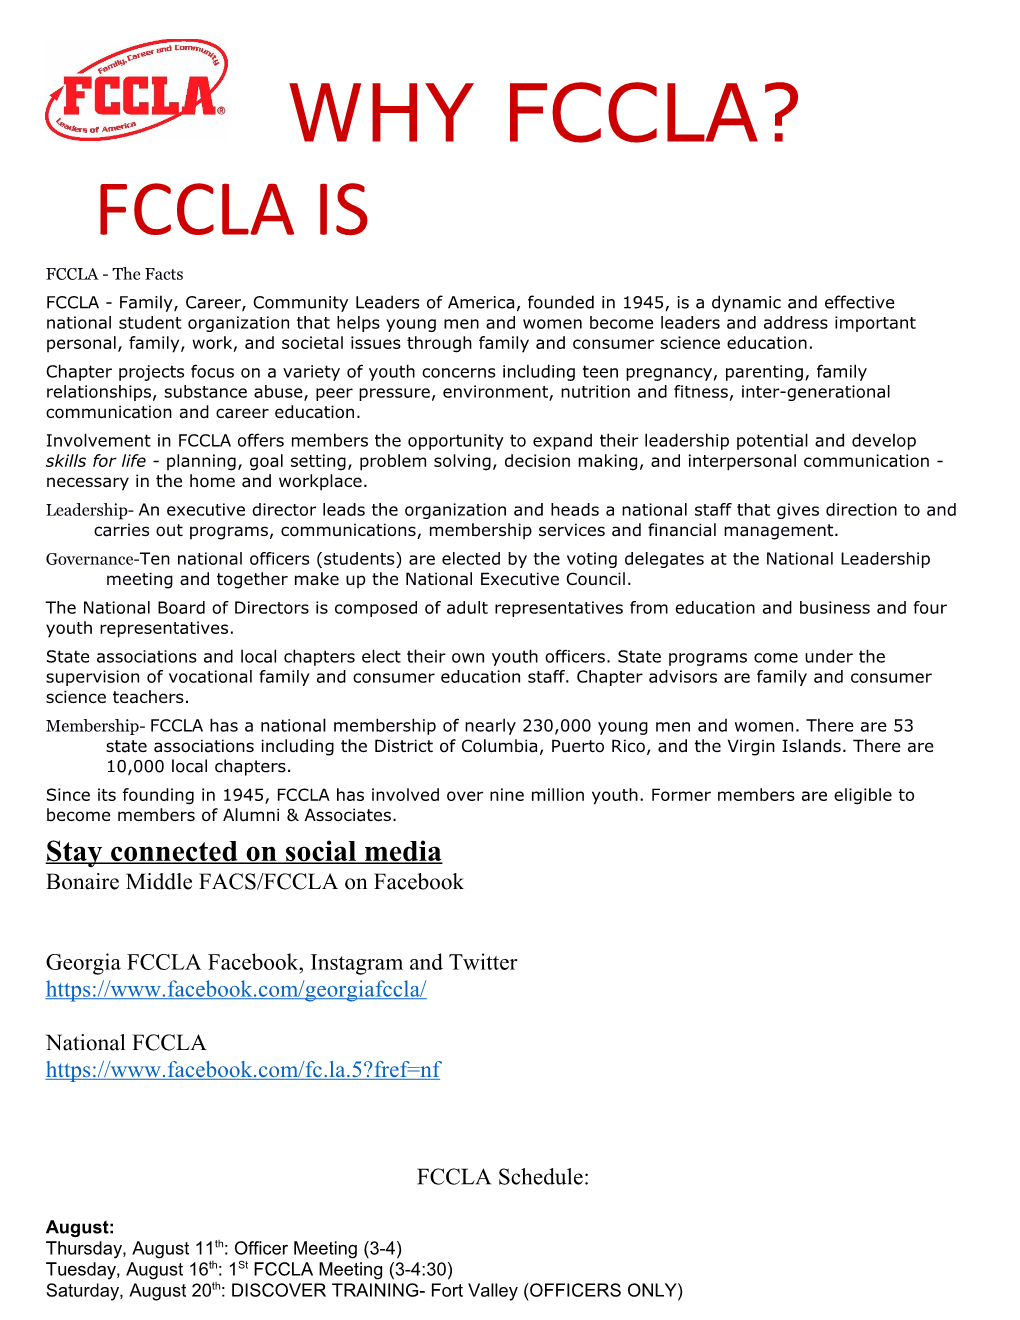 FCCLA Information Sheet